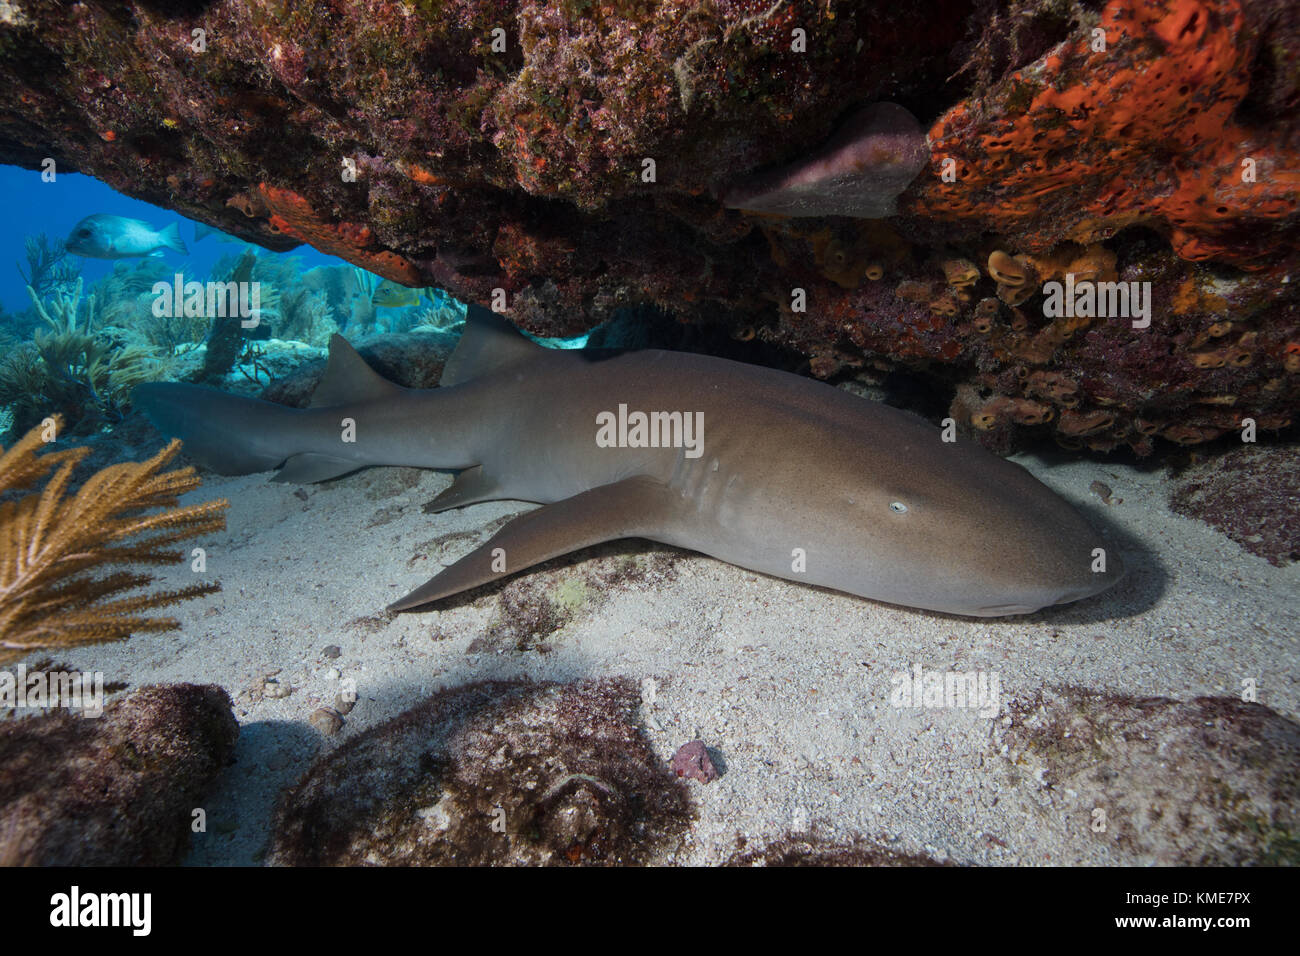 A Nurse shark lays on a sand bottom under a ledge of coral. Stock Photo